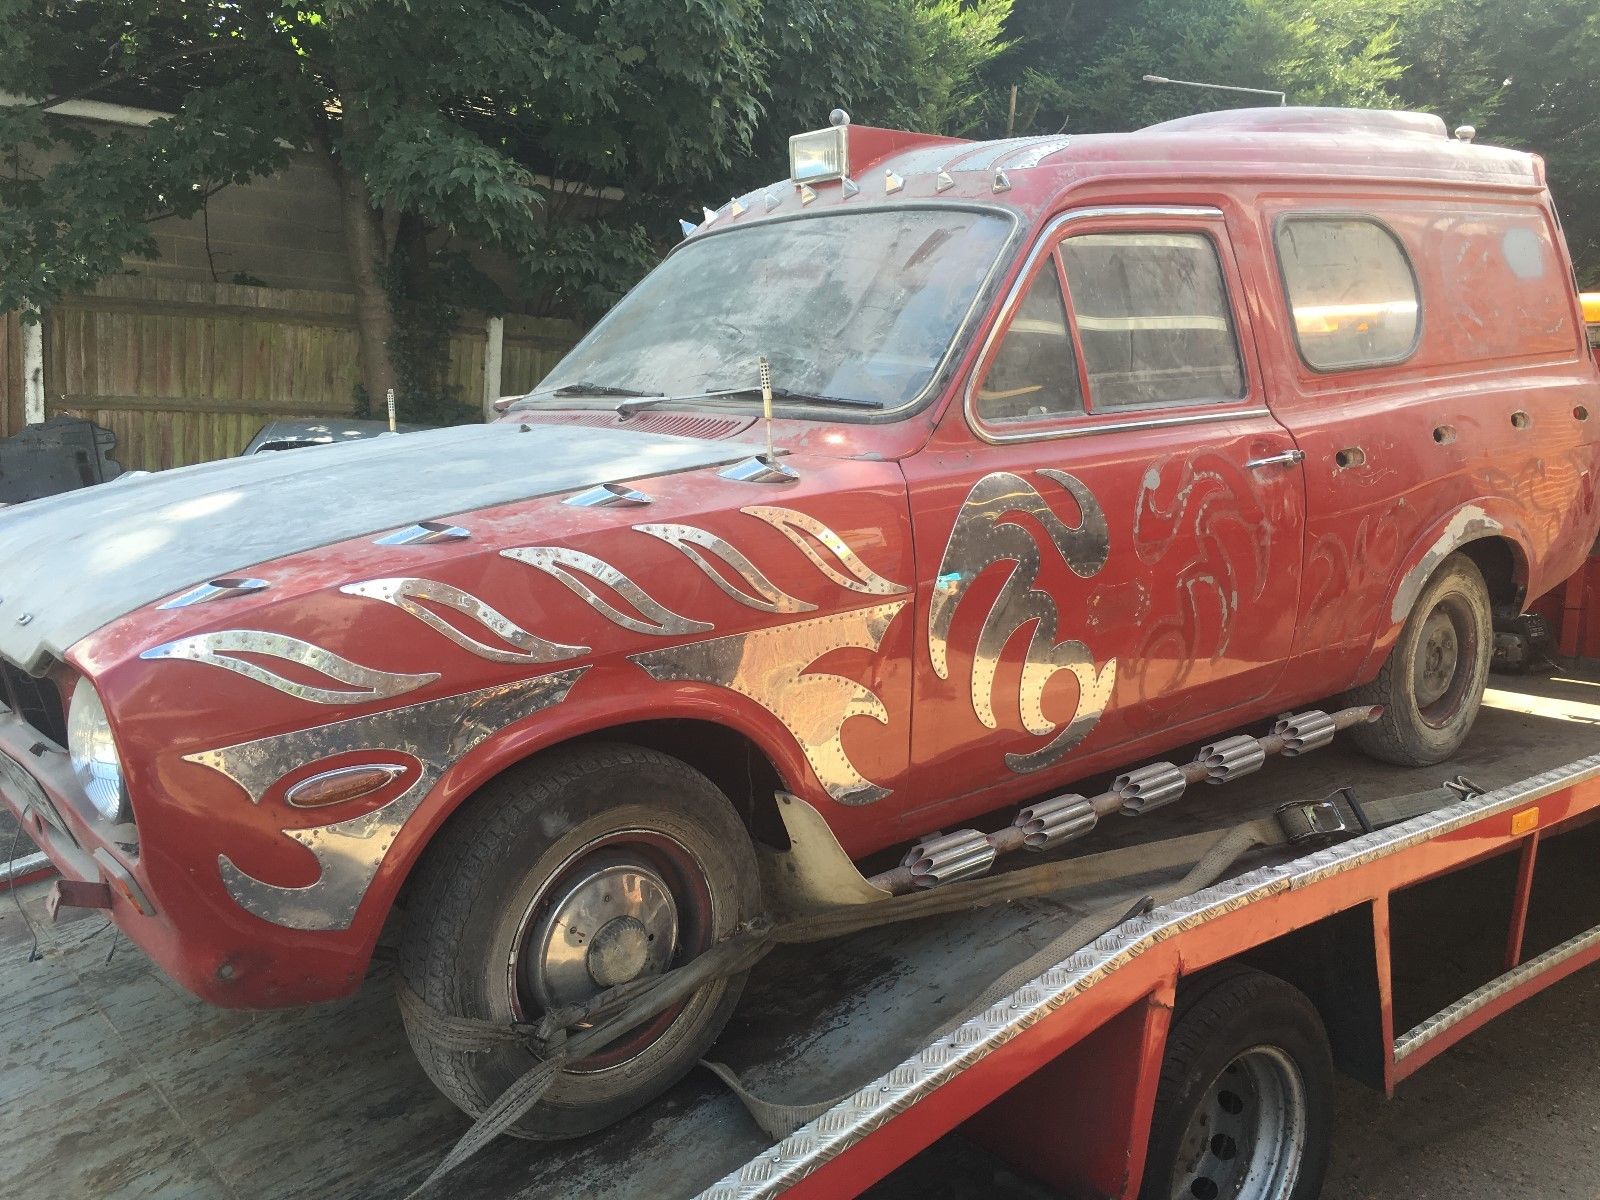 ford escort mk1 van for sale